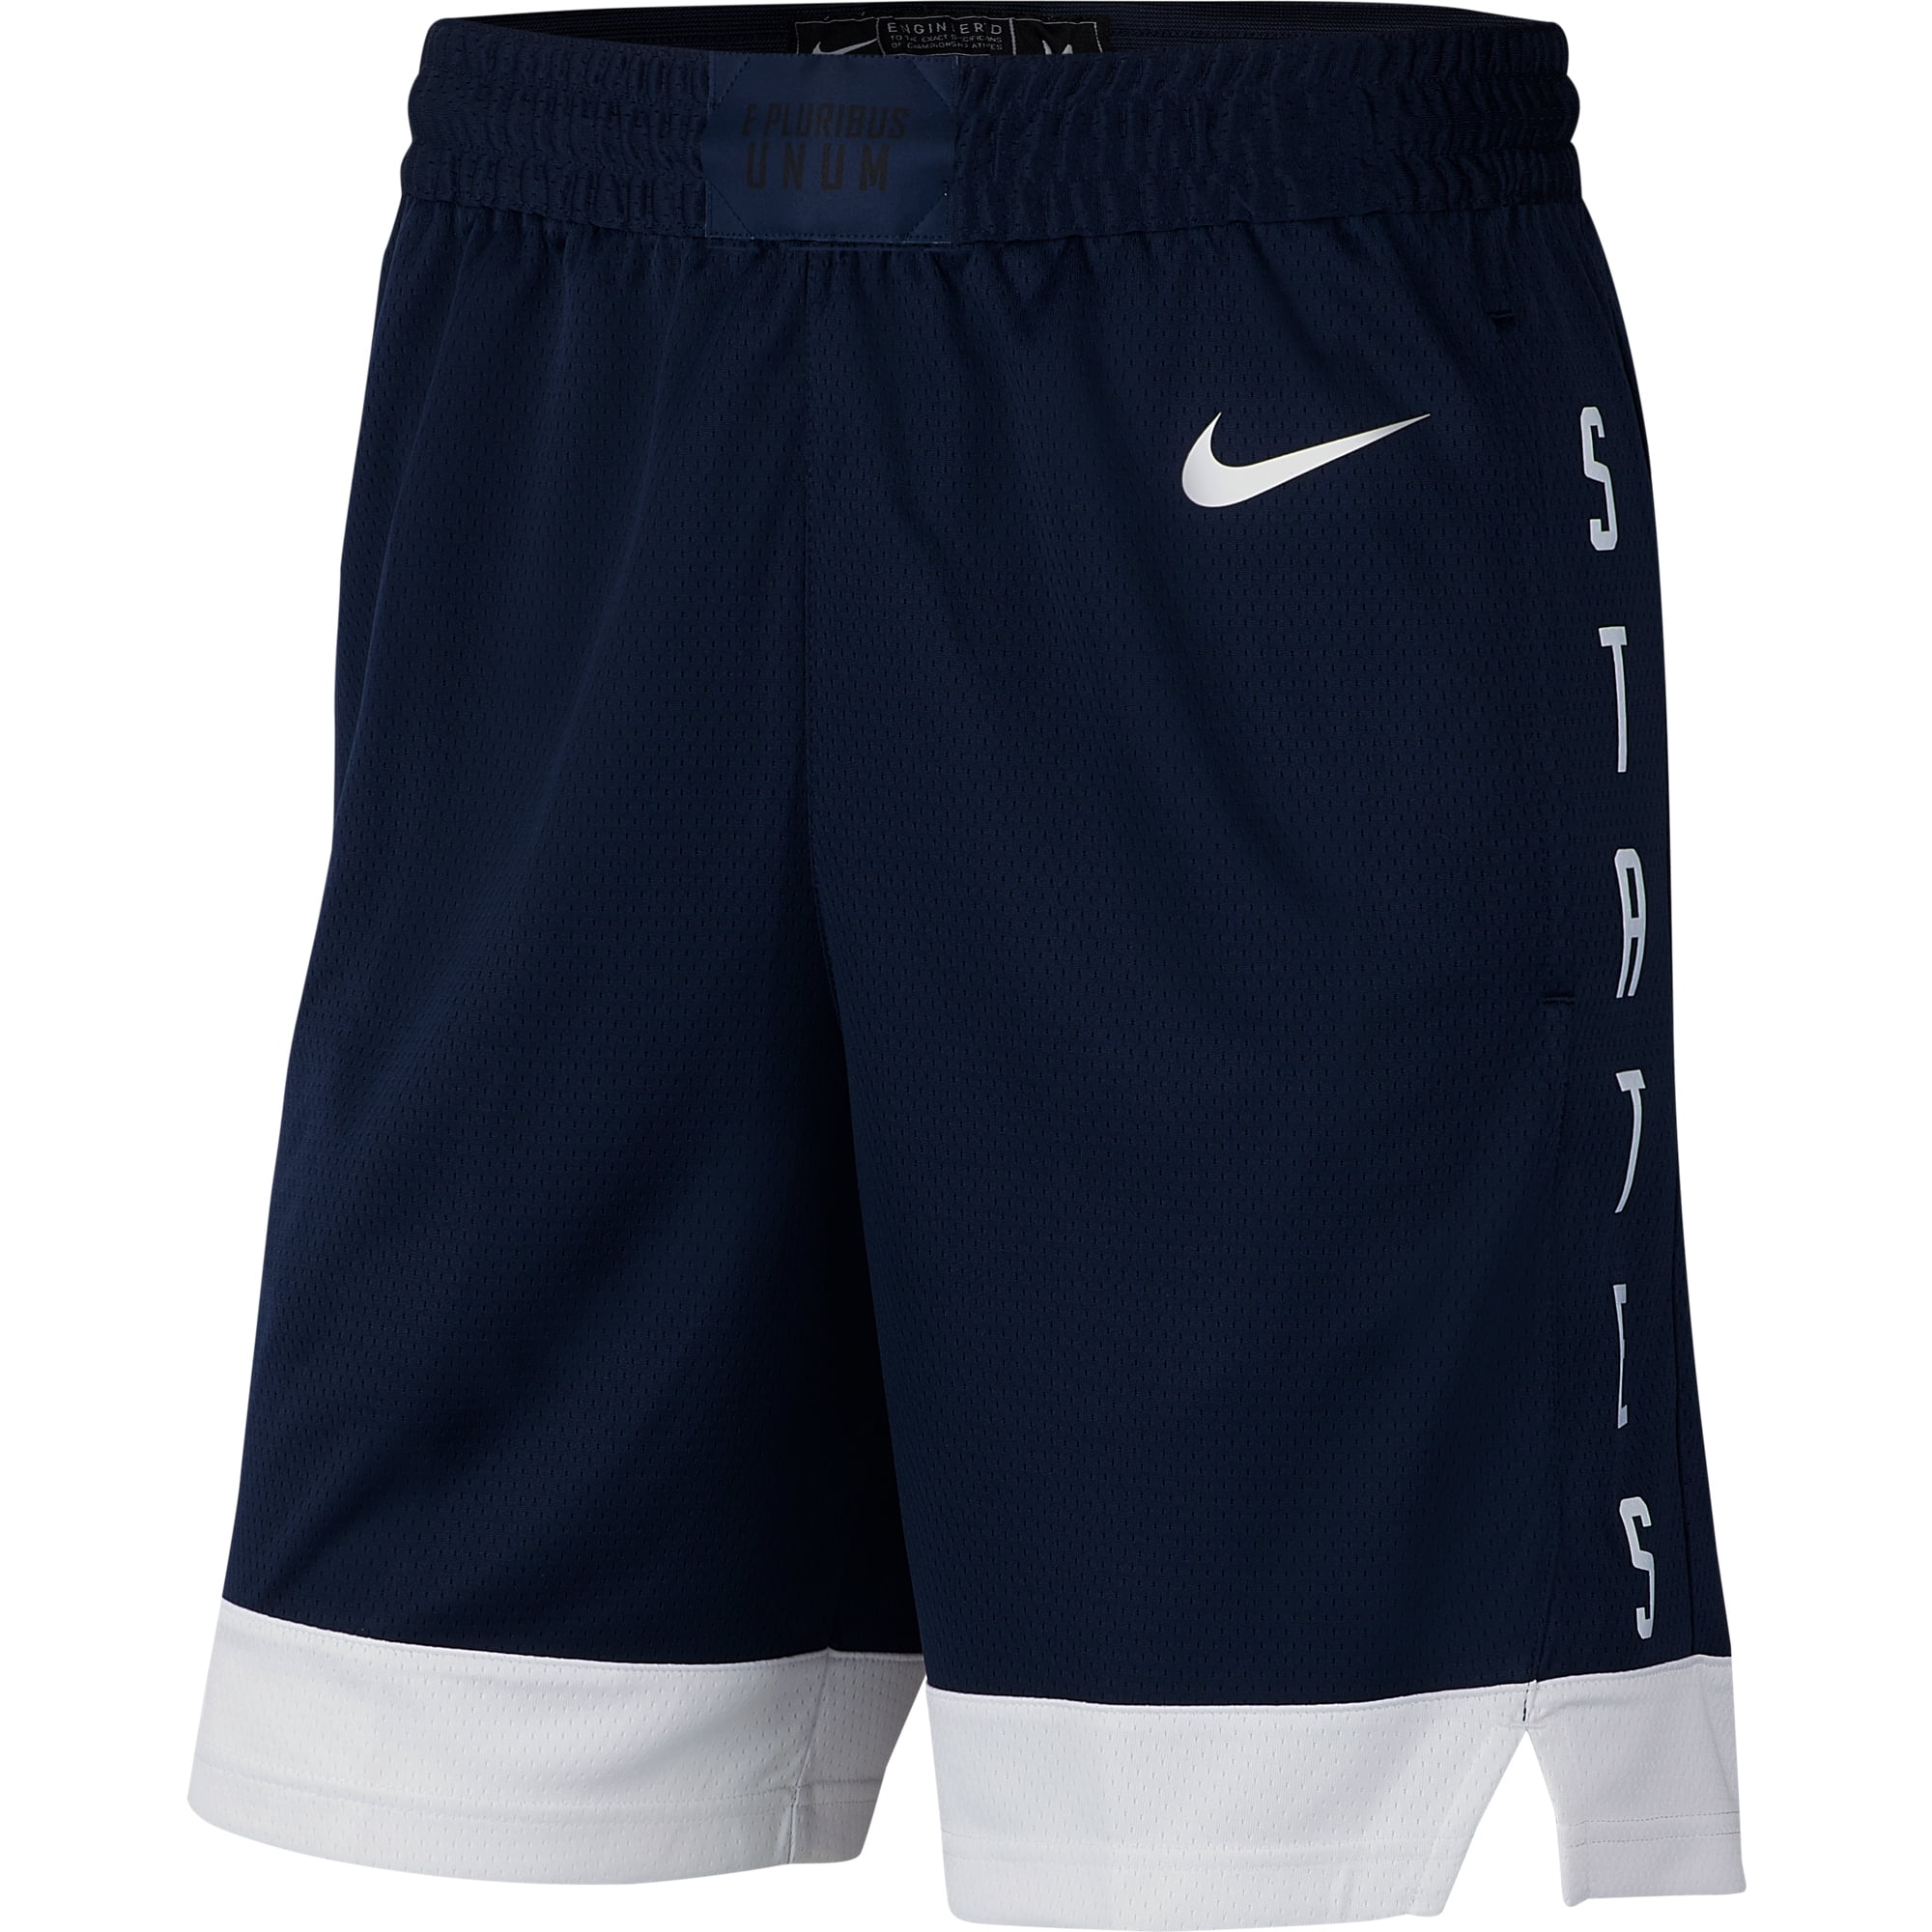 USA Basketball Nike Limited Swingman Shorts - Navy - Walmart.com ...